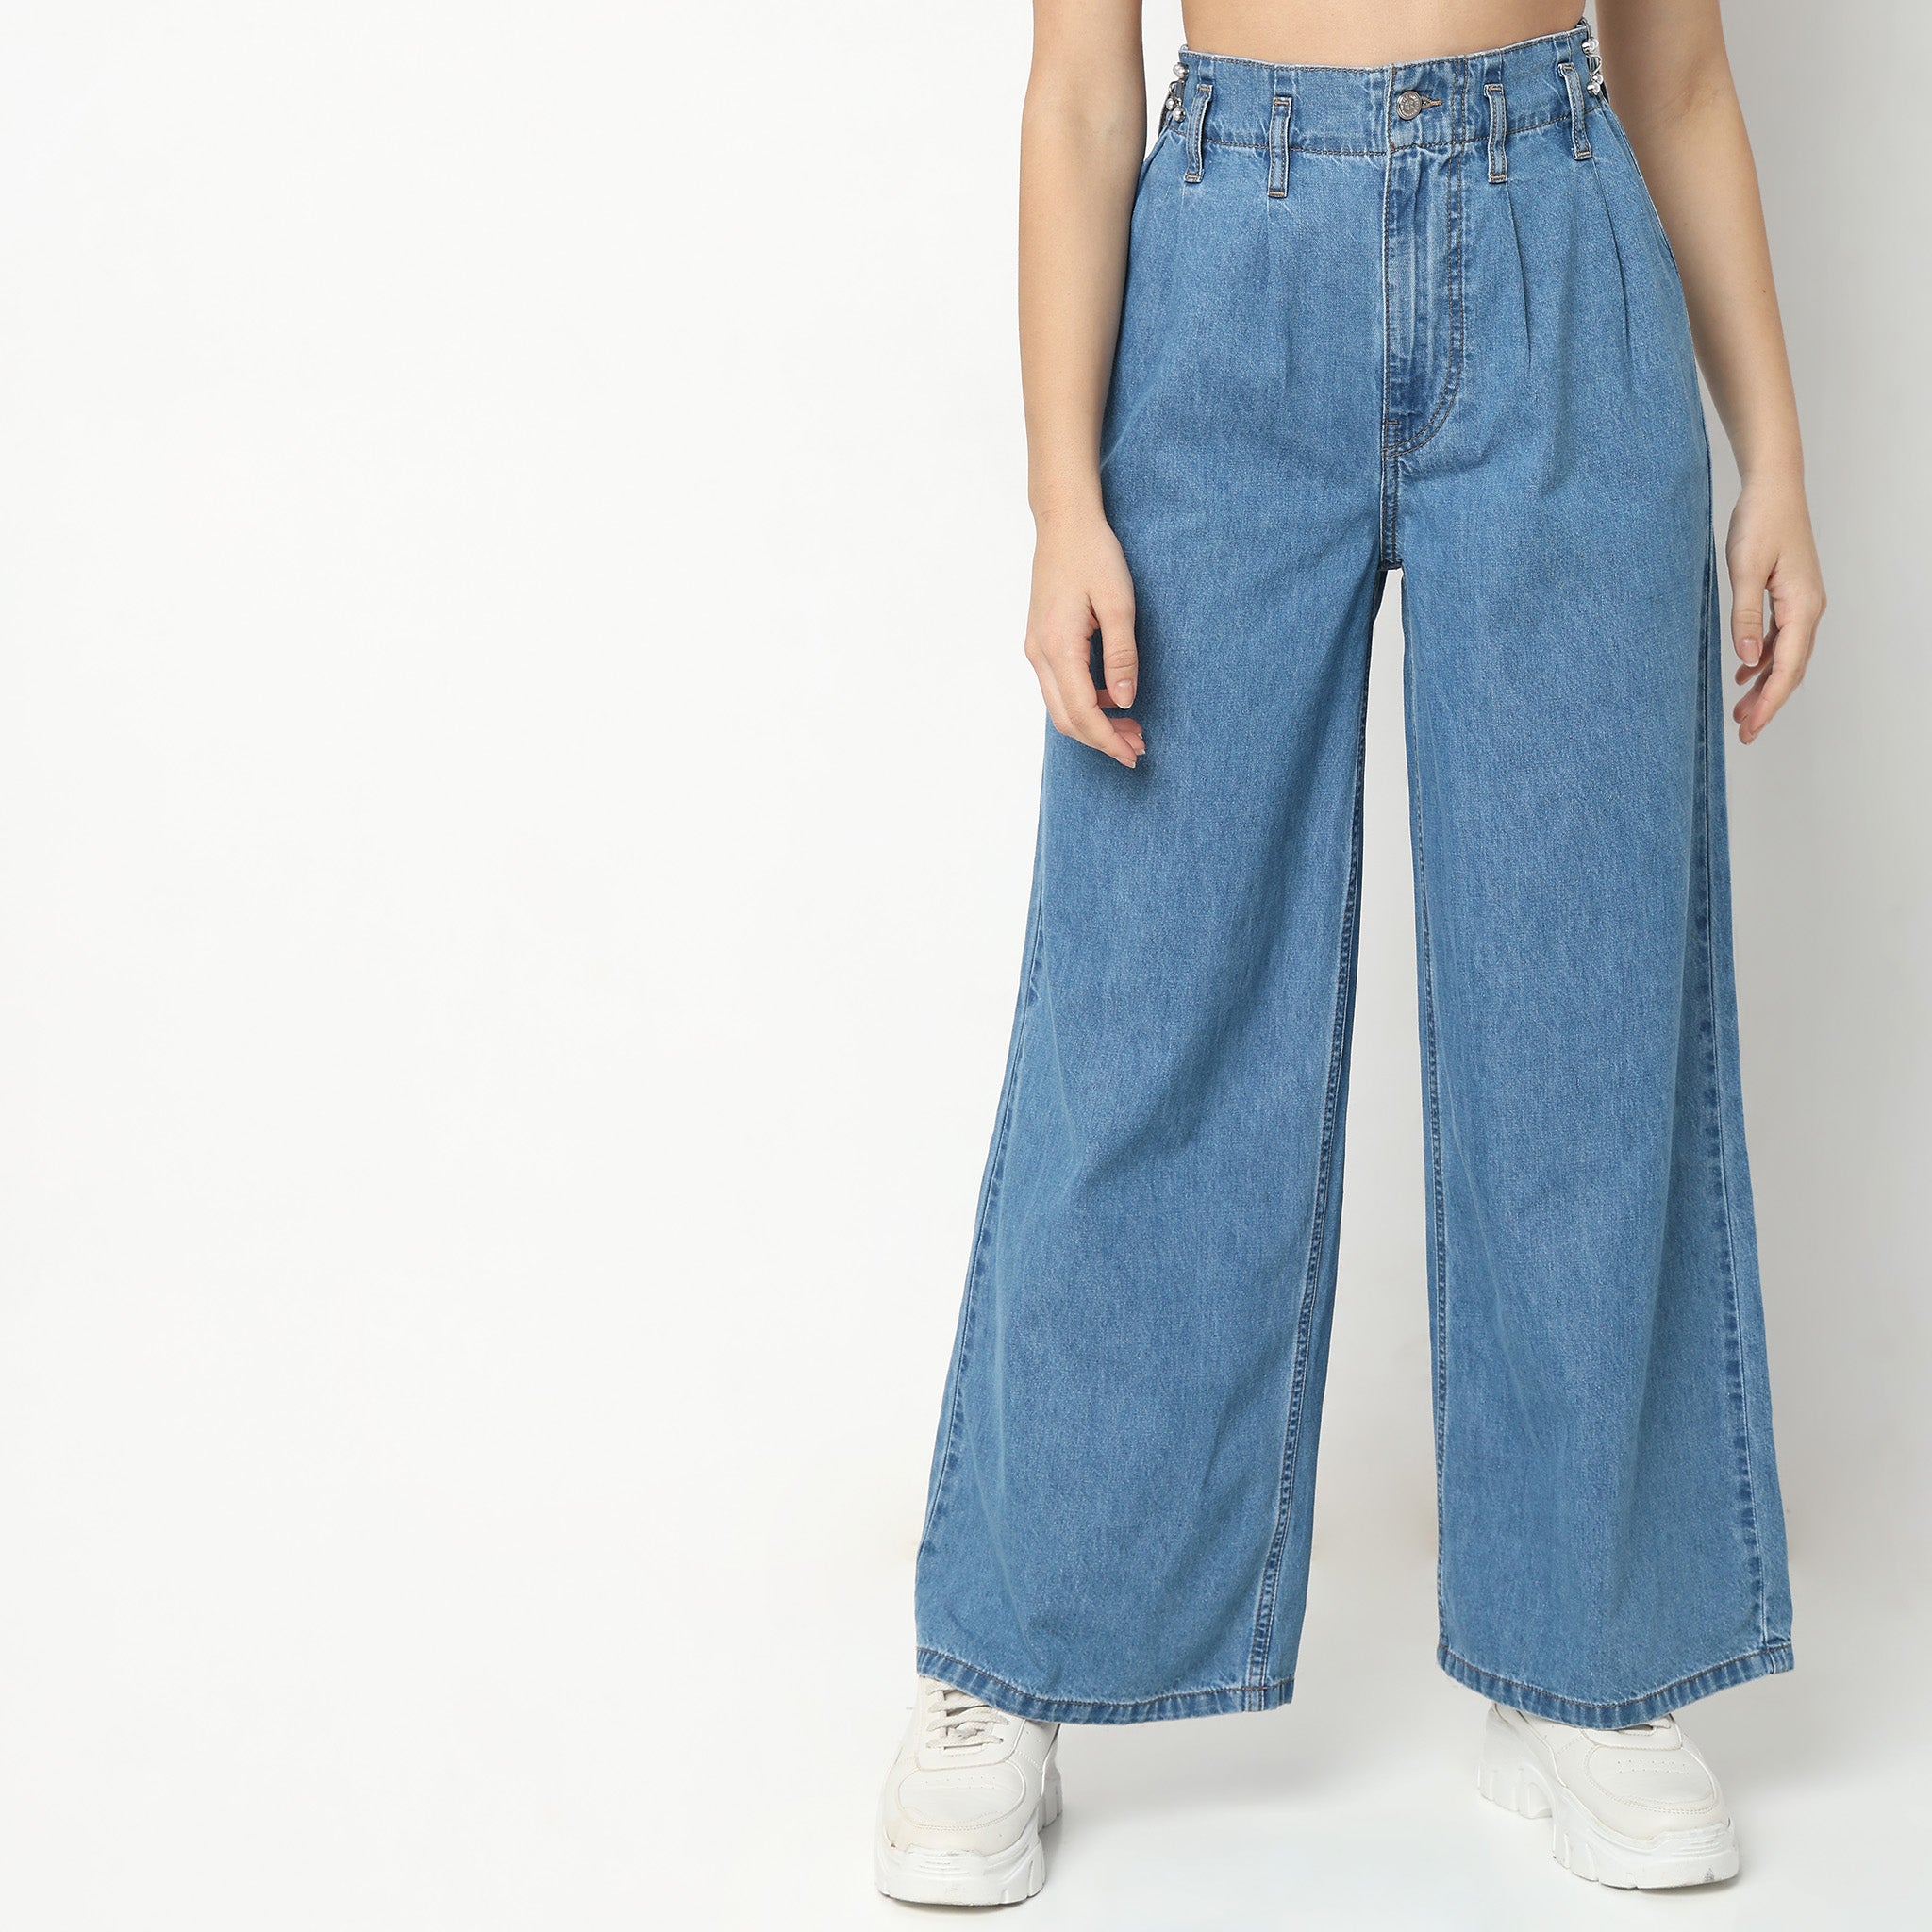 Buy MK Jeans Wide Leg Stone Blue Jeans for Women Baggy Blue Women Jeans |  Size-26 at Amazon.in